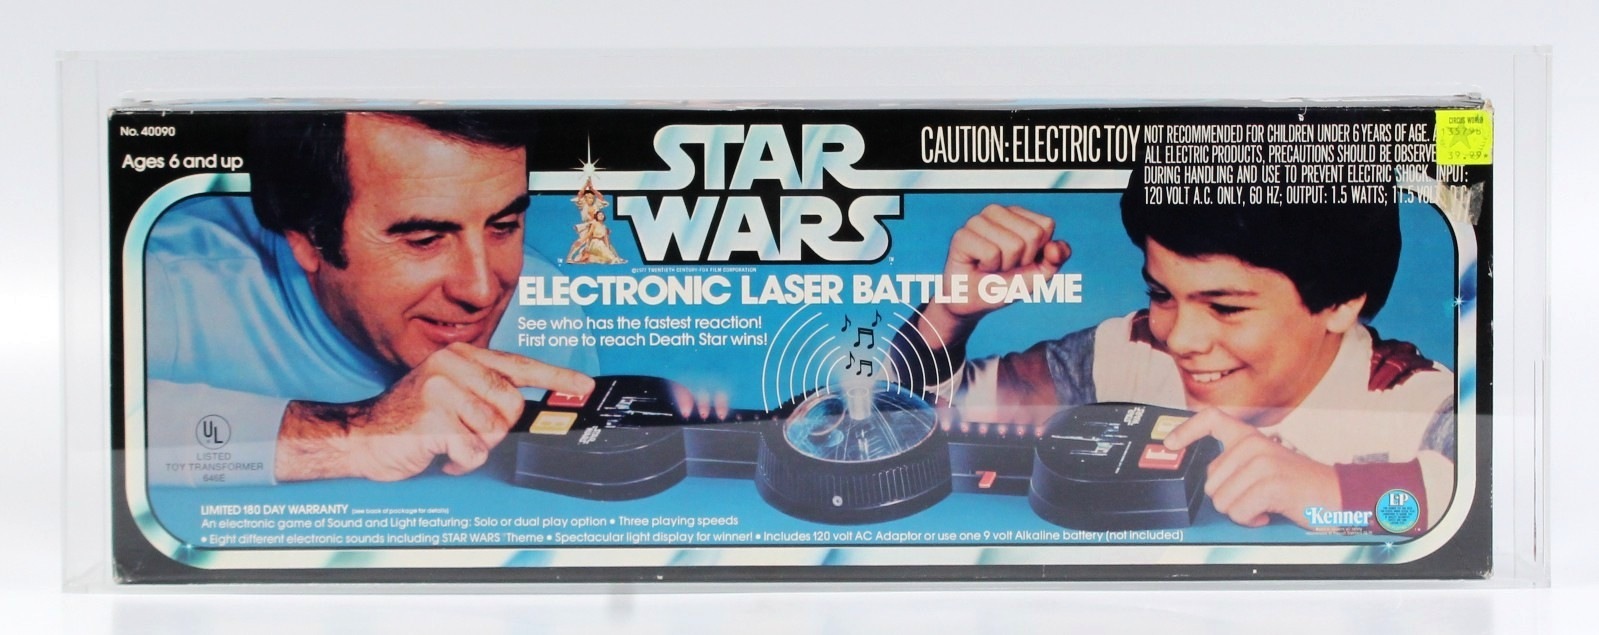 star wars laser battle game